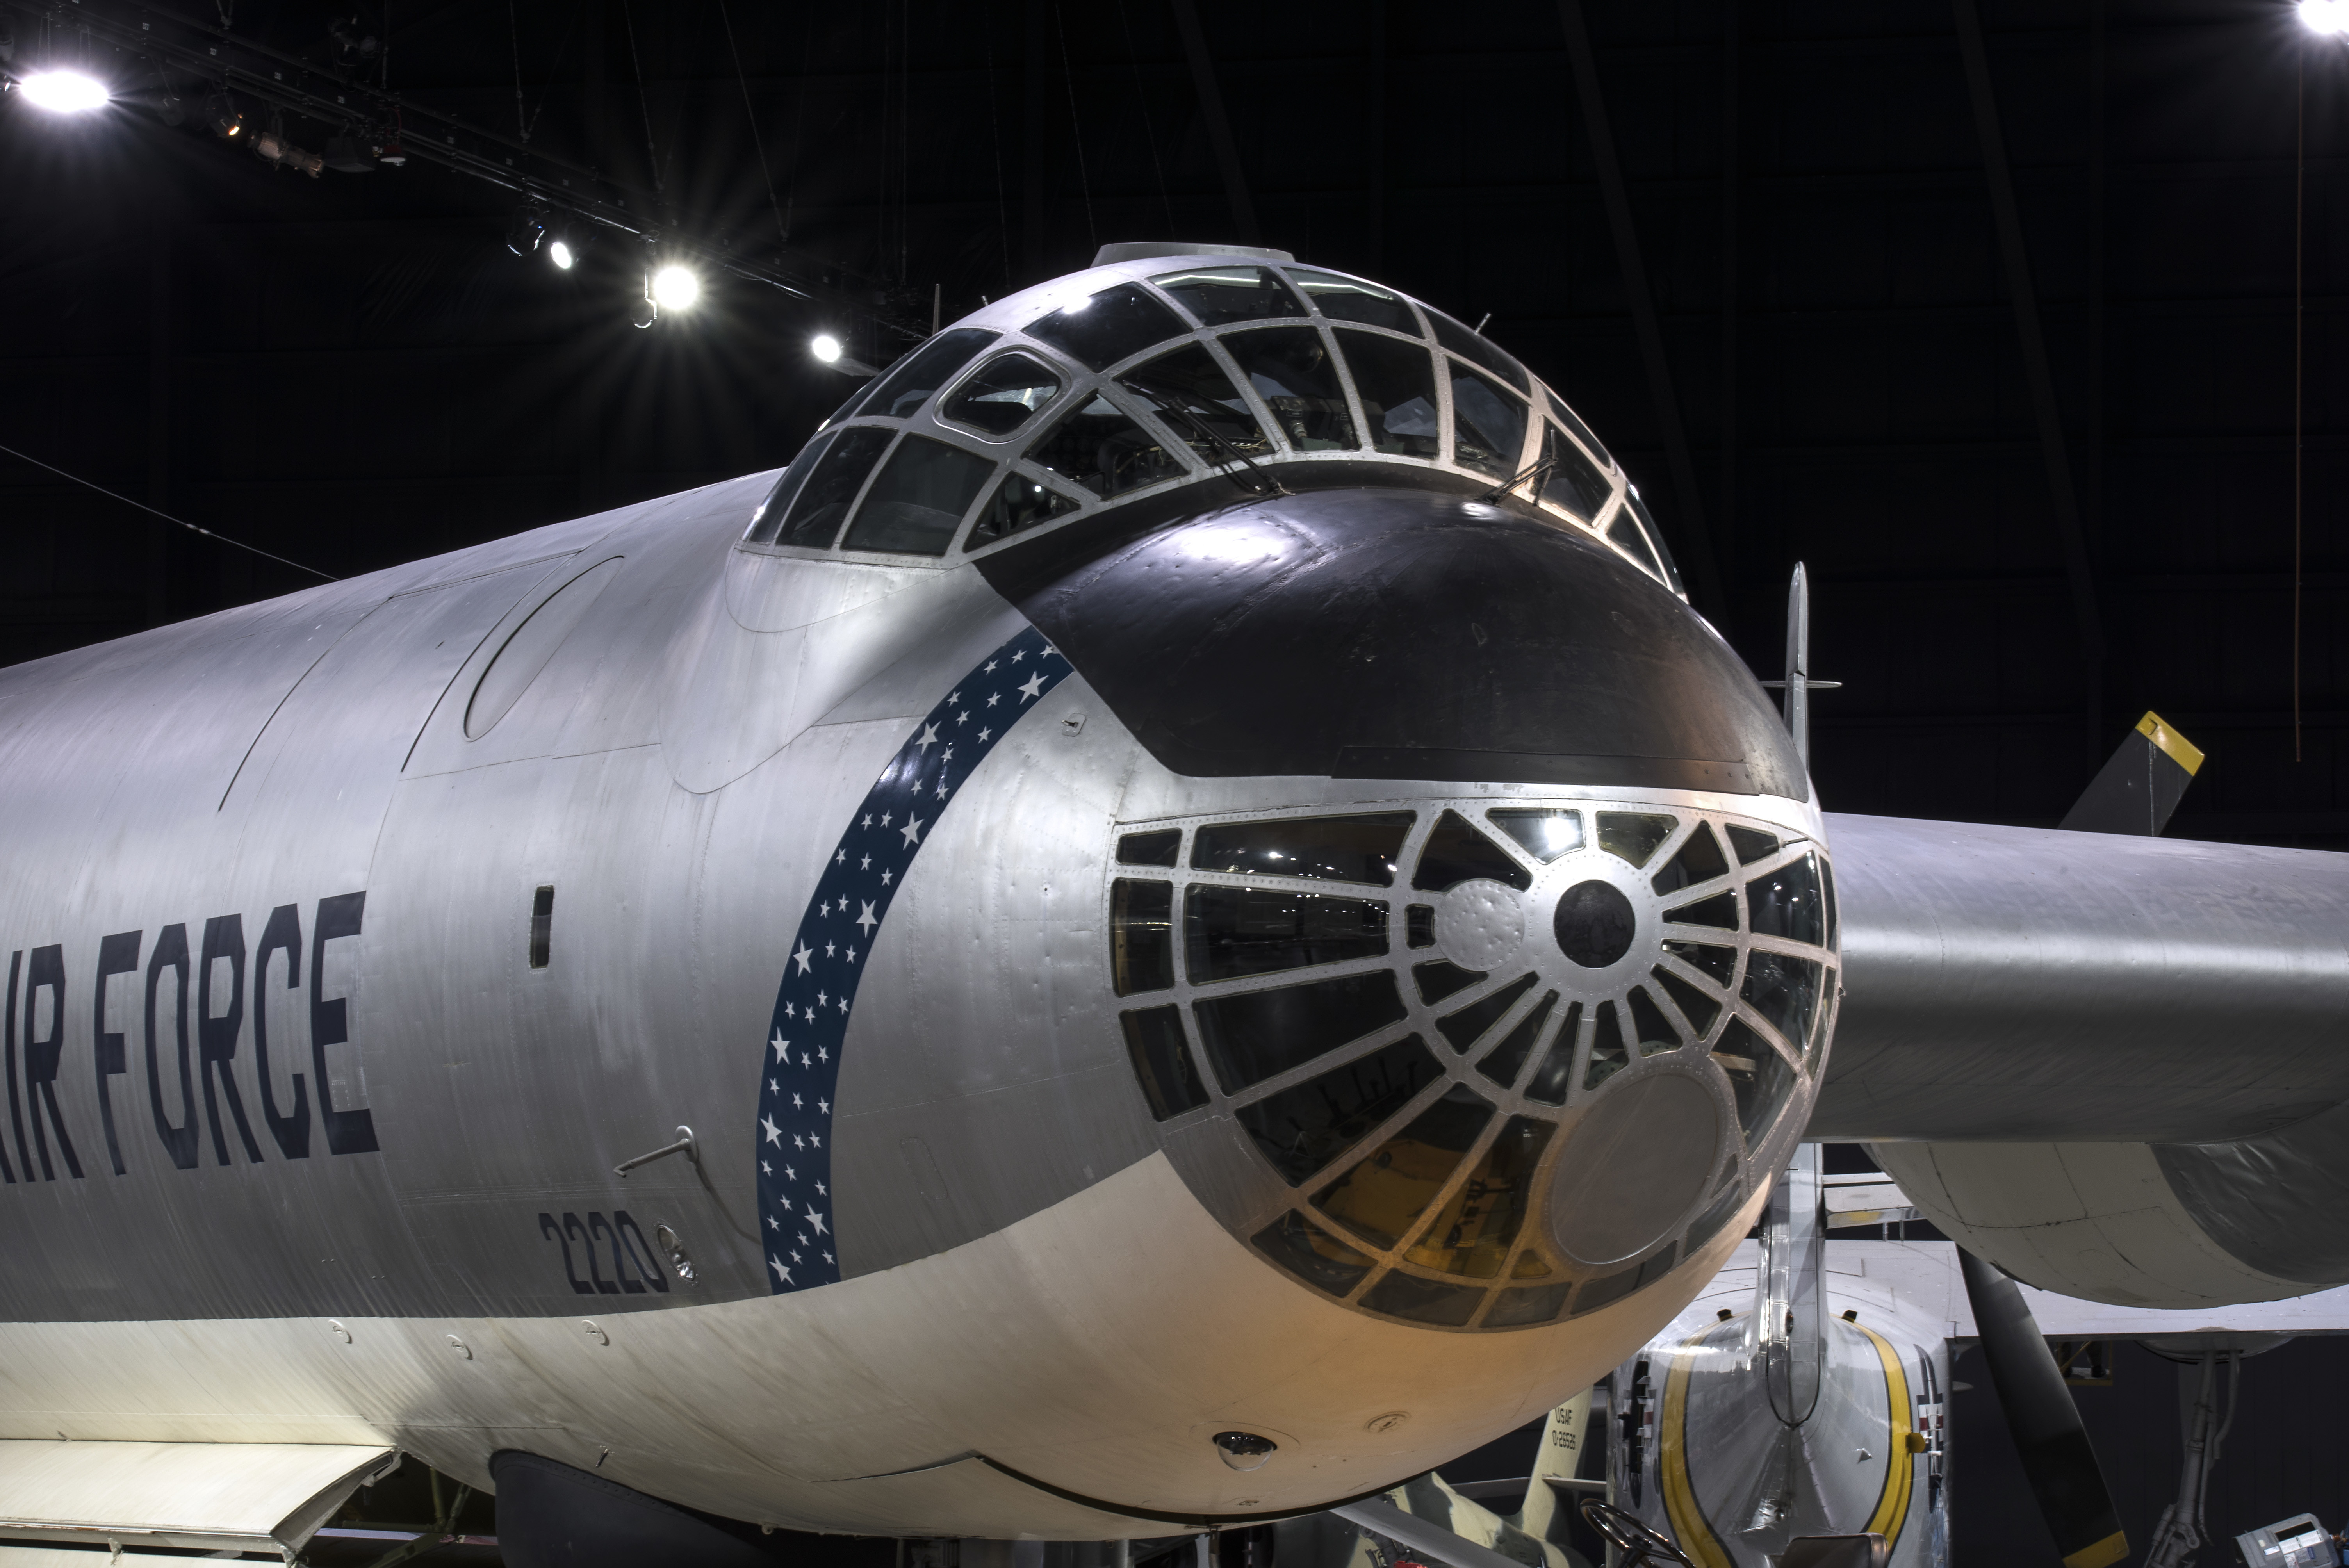 Convair B-36 Peacemaker - Wikipedia